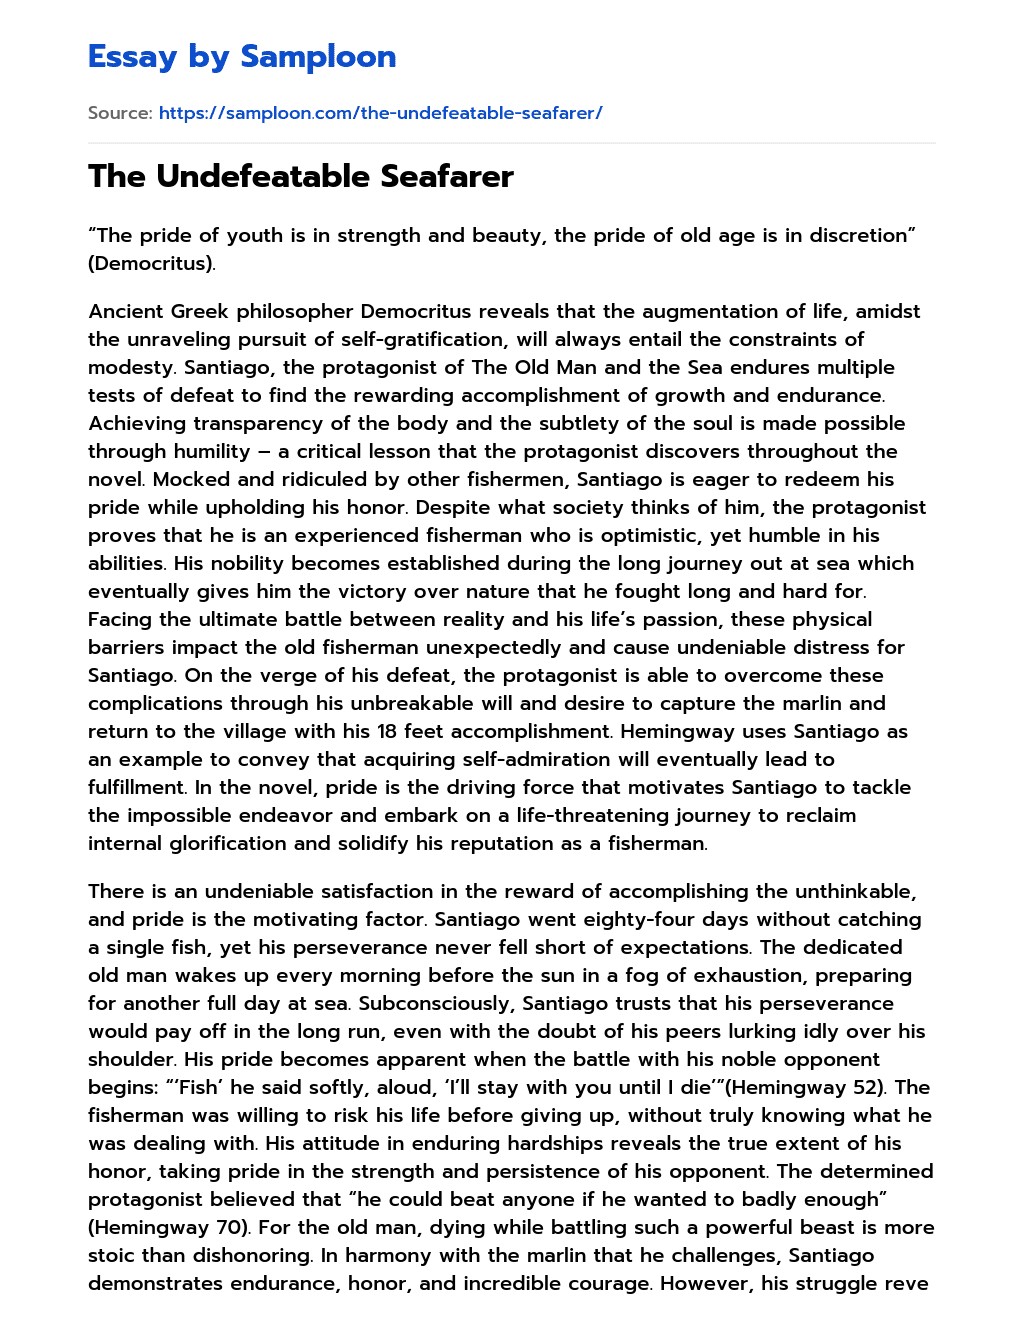 The Undefeatable Seafarer essay